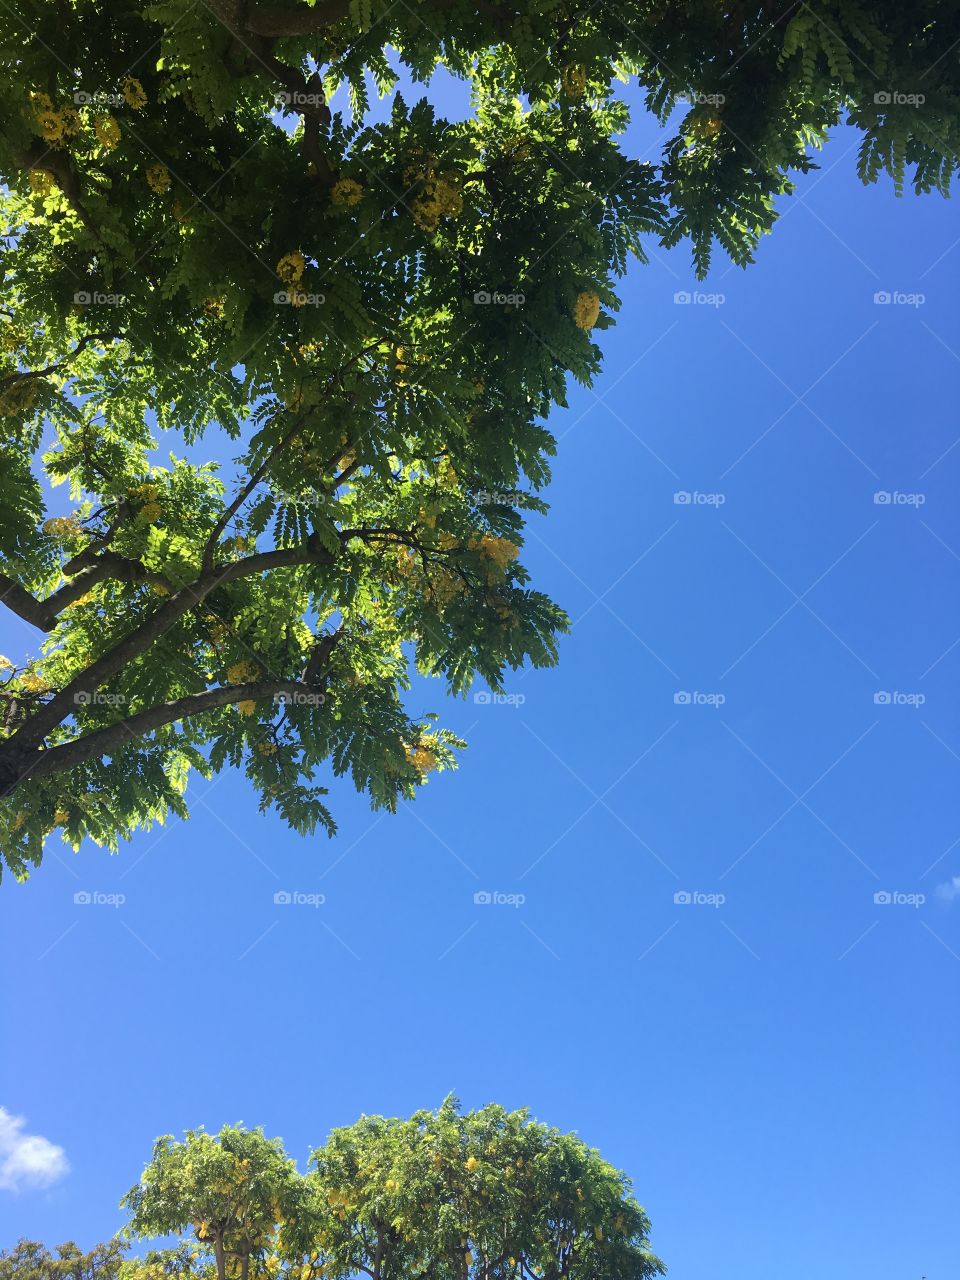 Tree leaves on blue sky background 